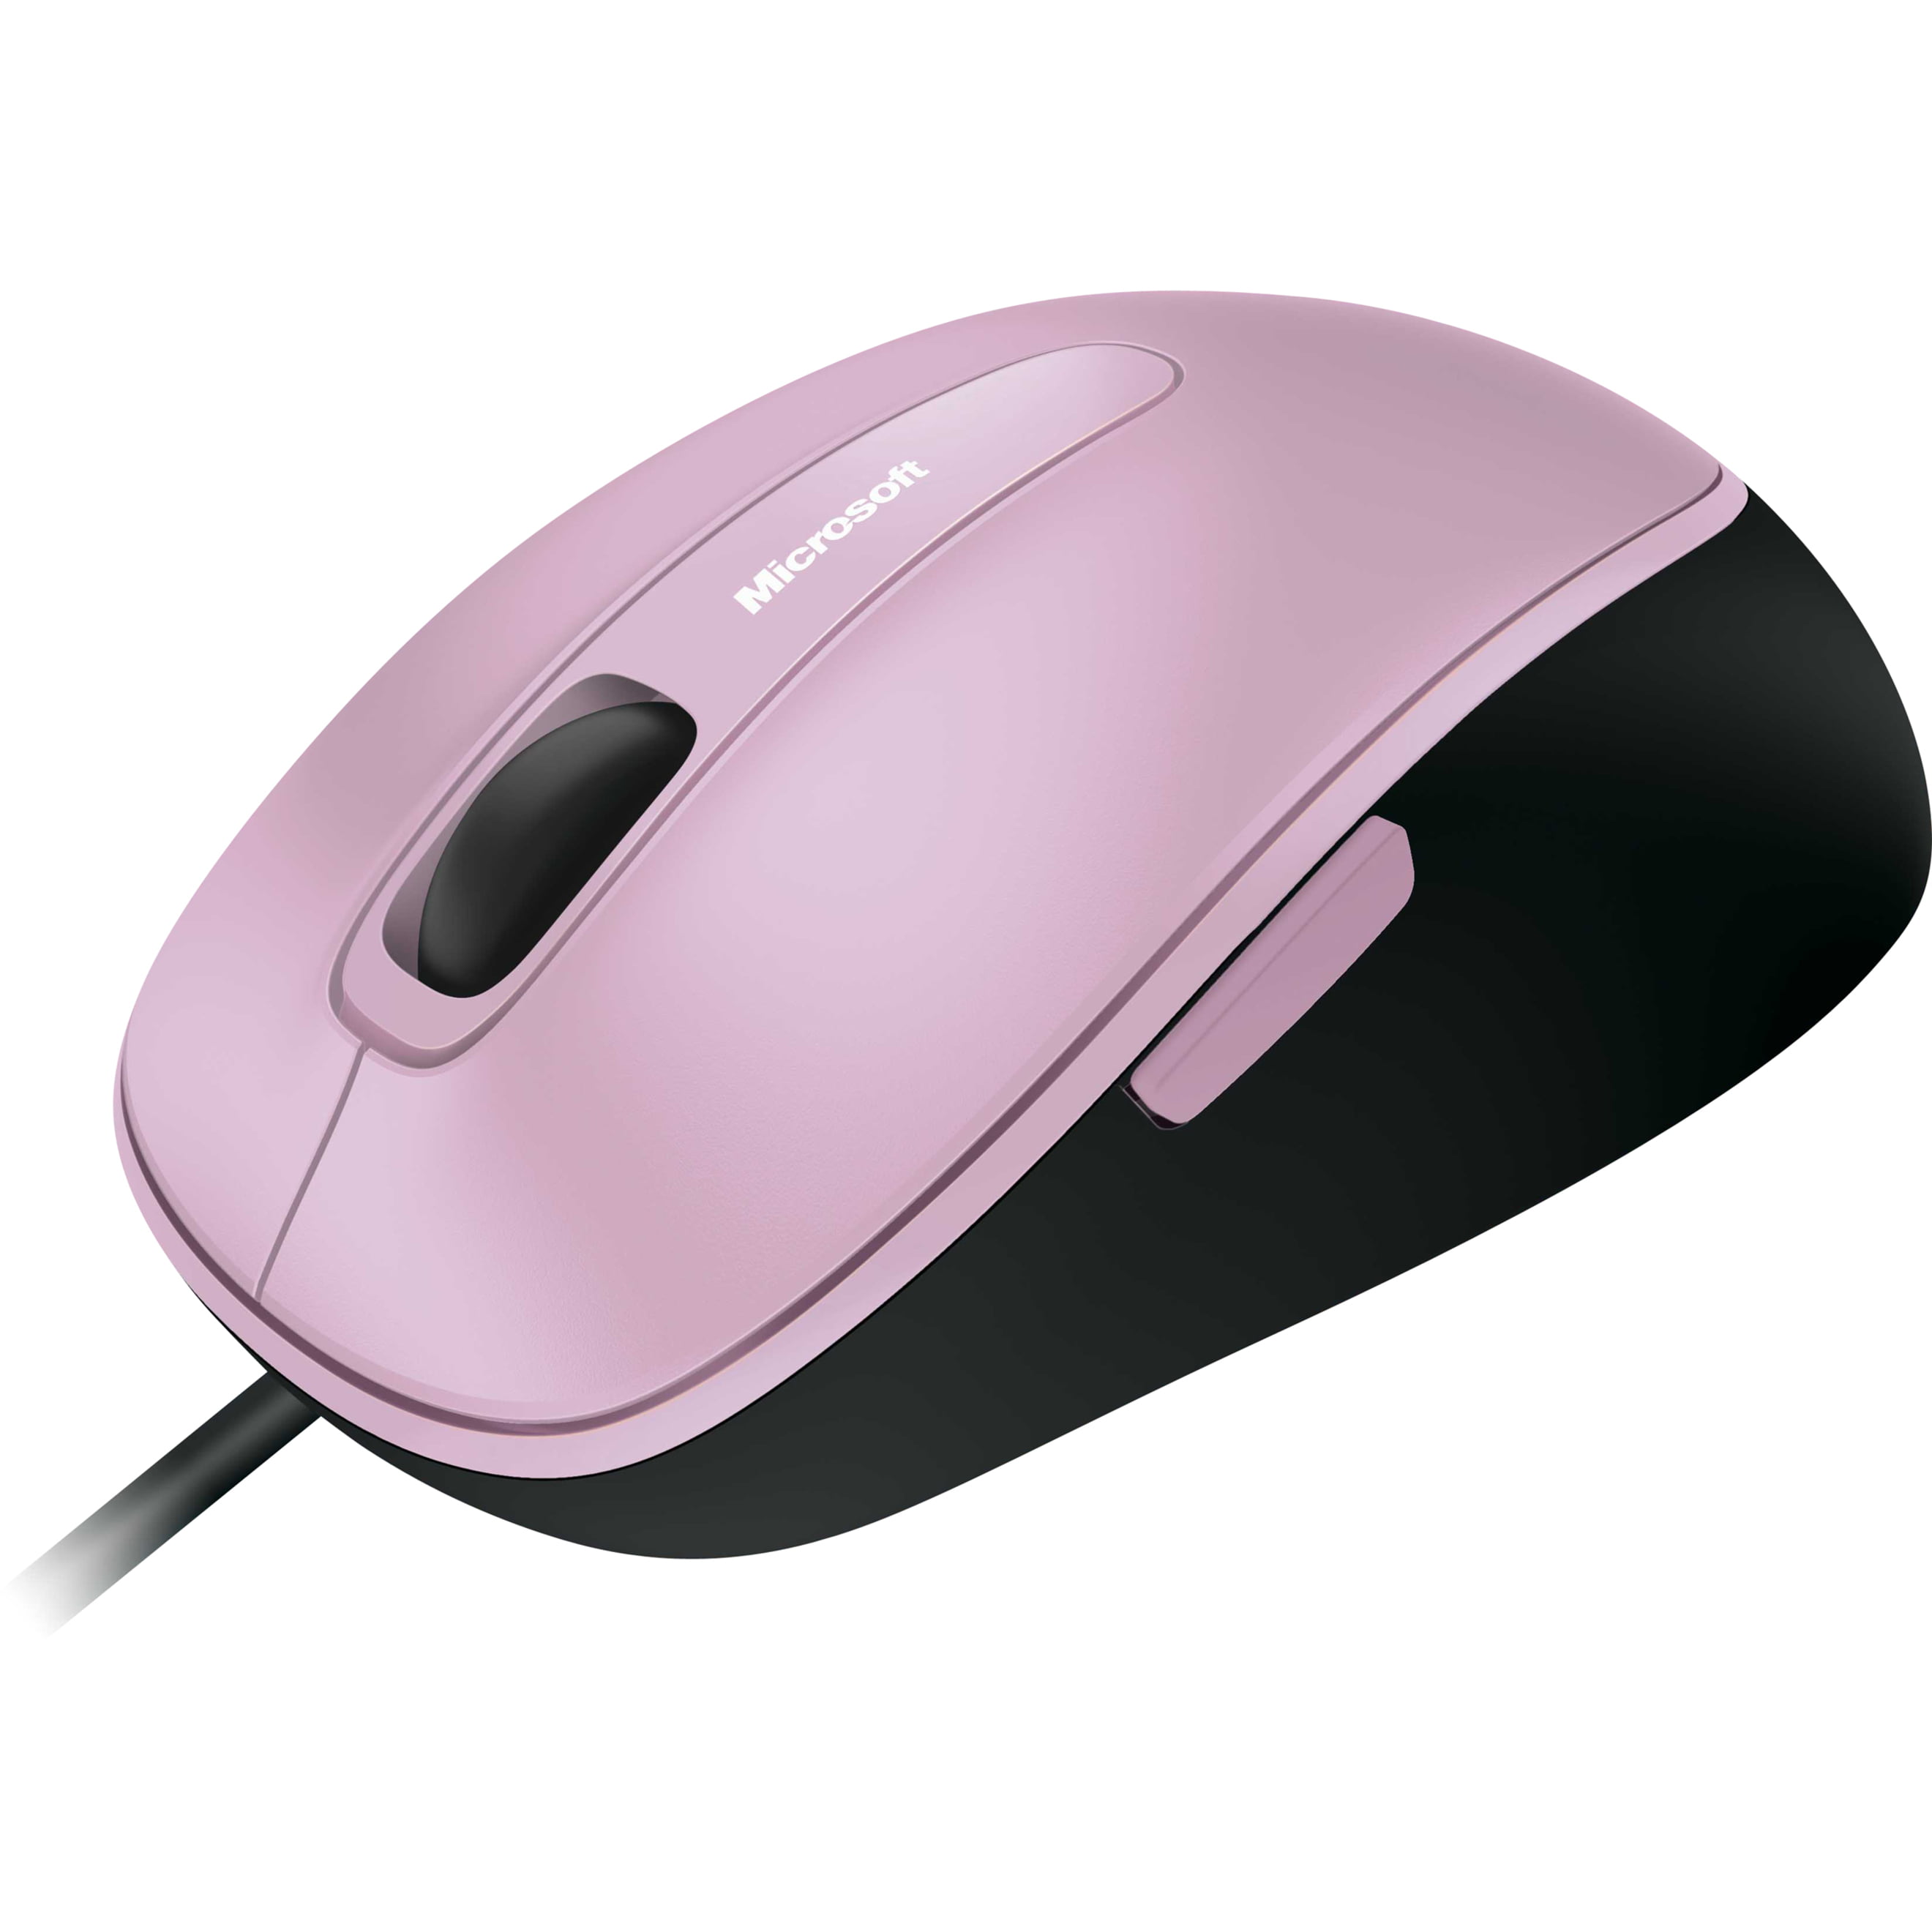 F mice. Microsoft Comfort 4500. Microsoft Comfort Mouse. Мышь комфорт 4500. Microsoft Mouse 2000.